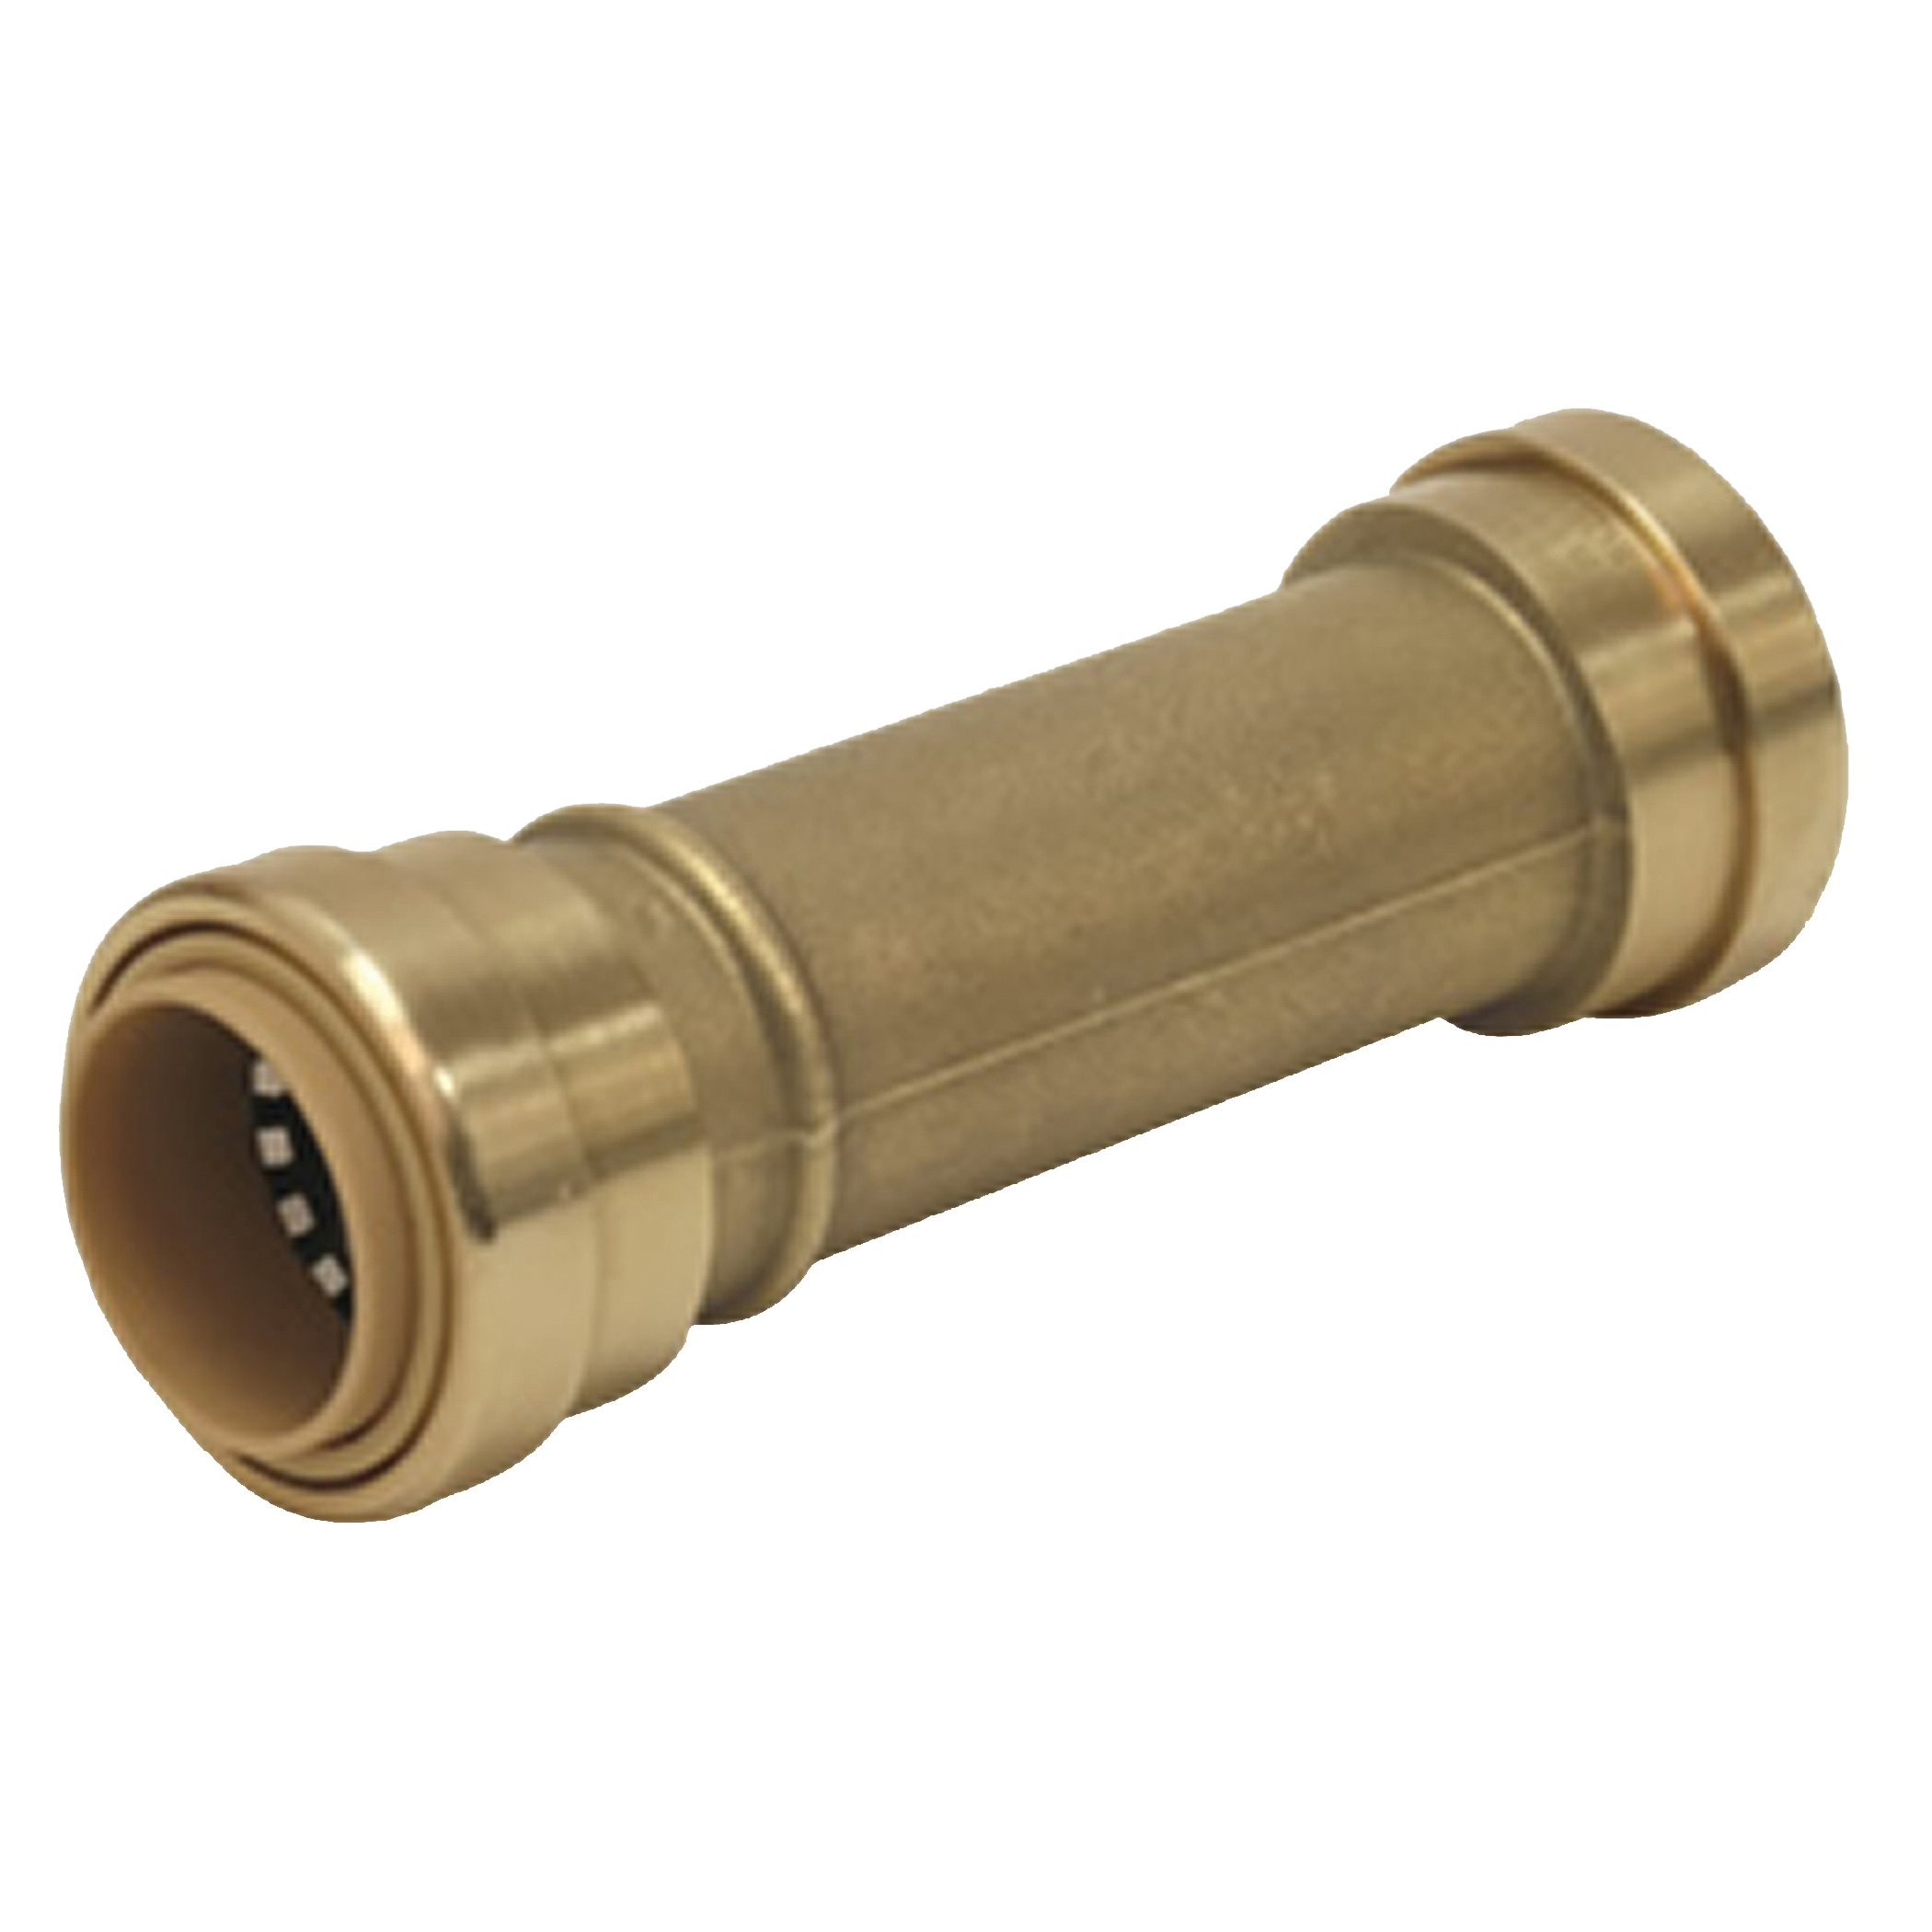 B & K ProLine Series 630-304HC Pipe Coupling, 3/4 in, Brass, 200 psi Pressure